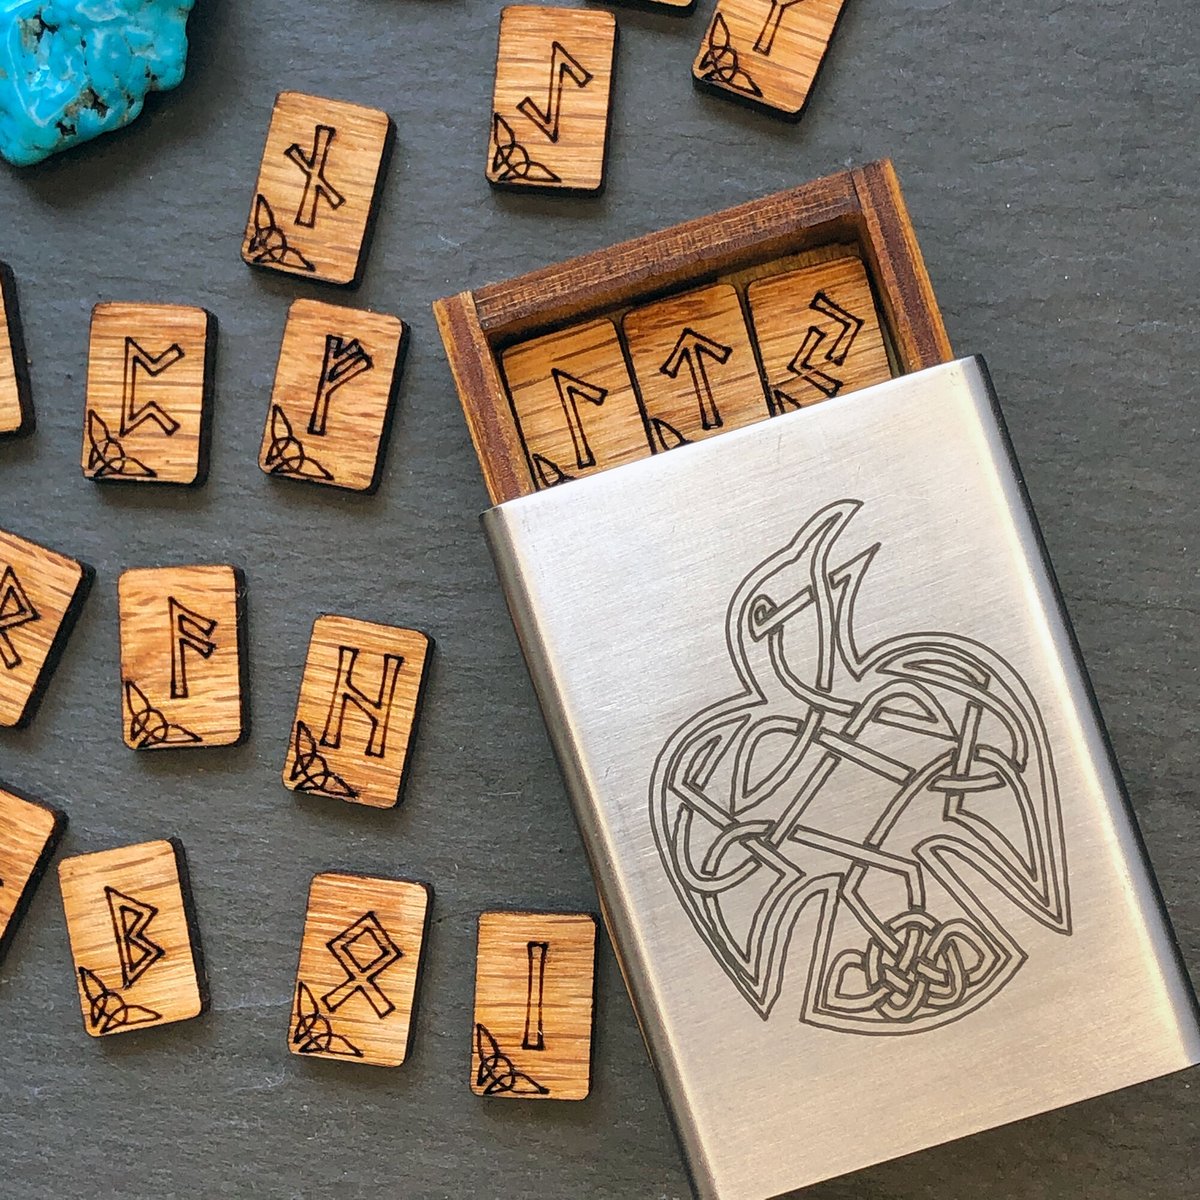 The Travel rune are now made of Solid Oak!  I reworked the design to work with oak, and I think they look amazing!  What do you think?
.
.
.
#CelticKnotWorks #oak #Runes #elderfuthark #Rune #vikings #viking #vikingstyle #vikingsofinstagram #loveVikings #norse #norsemythology #vik